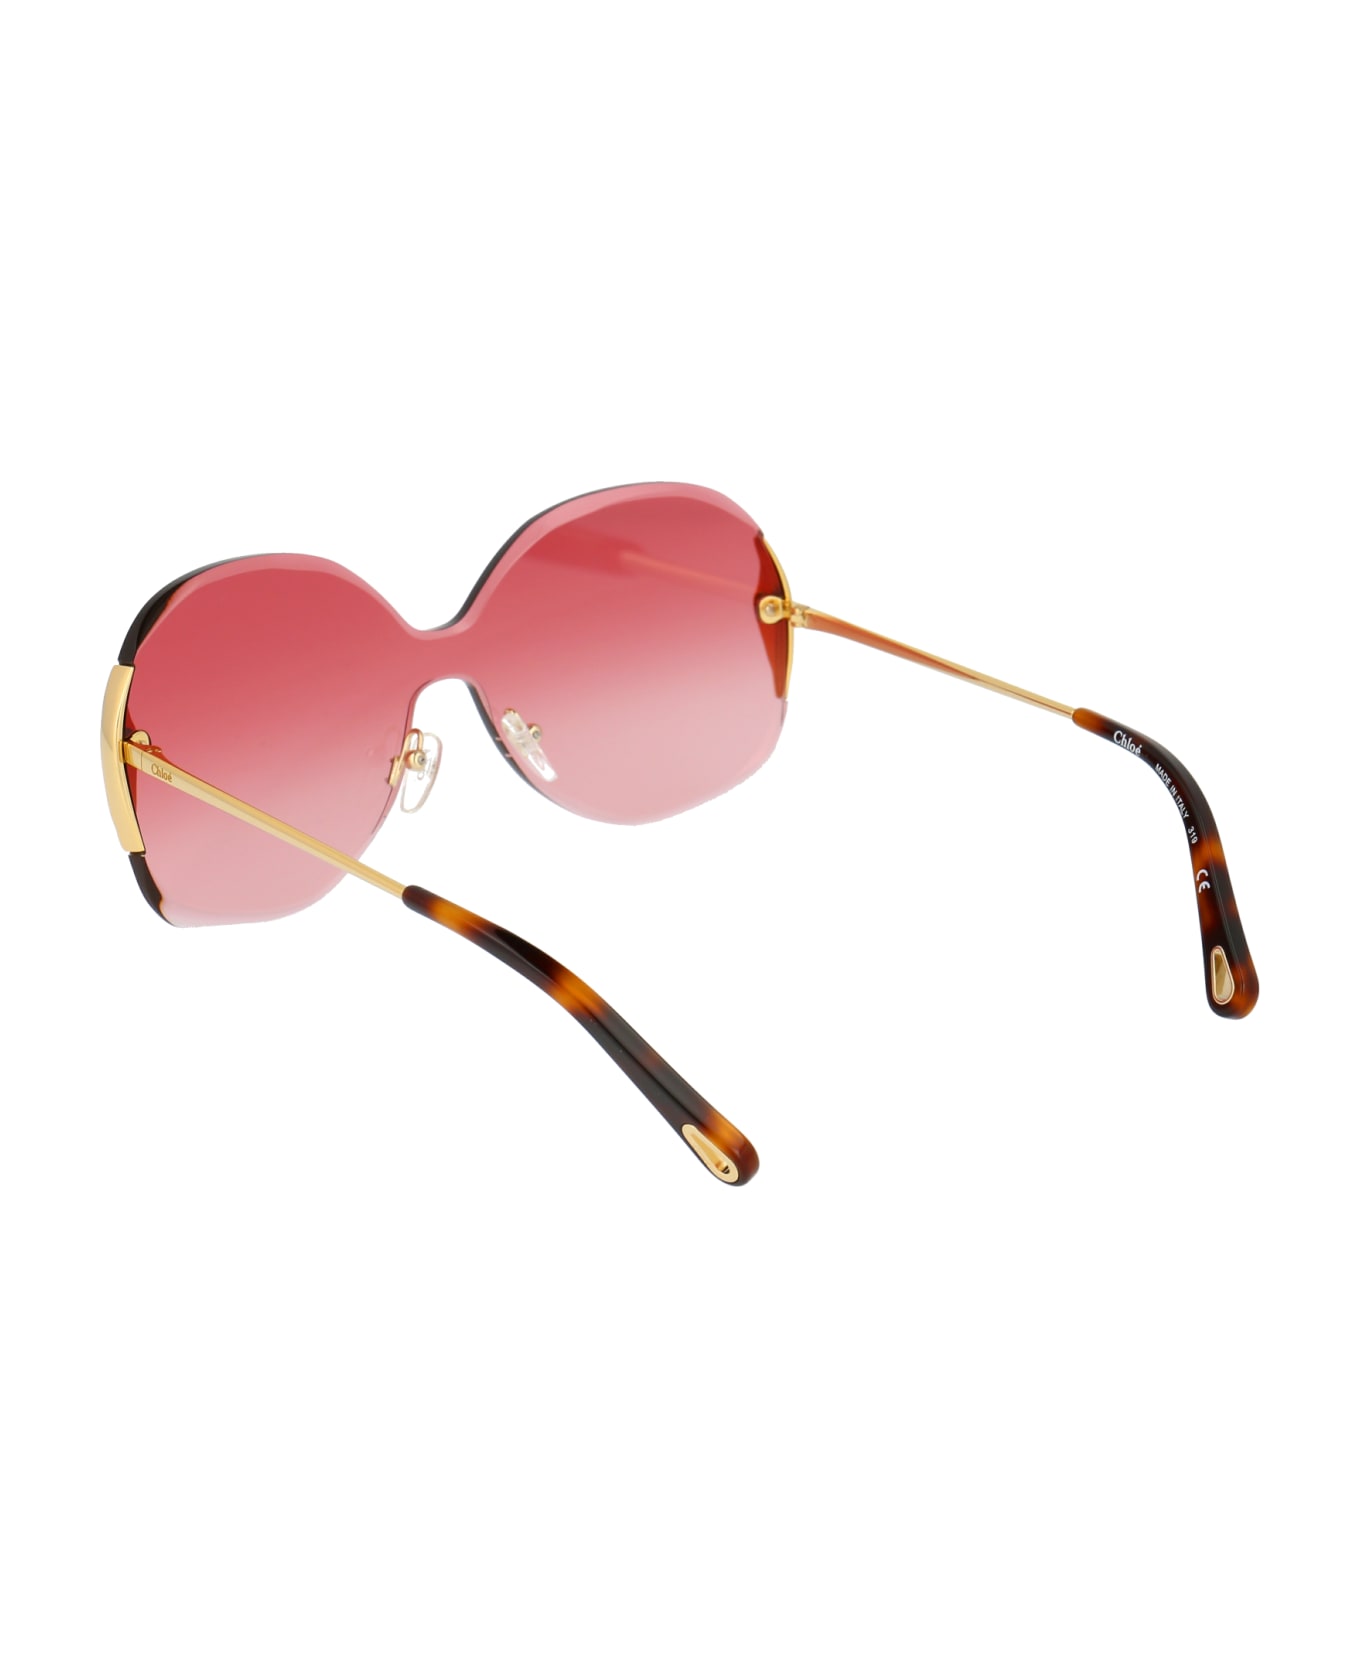 Chloé Eyewear Ce162s Sunglasses - 850 GOLD GRADIENT サングラス